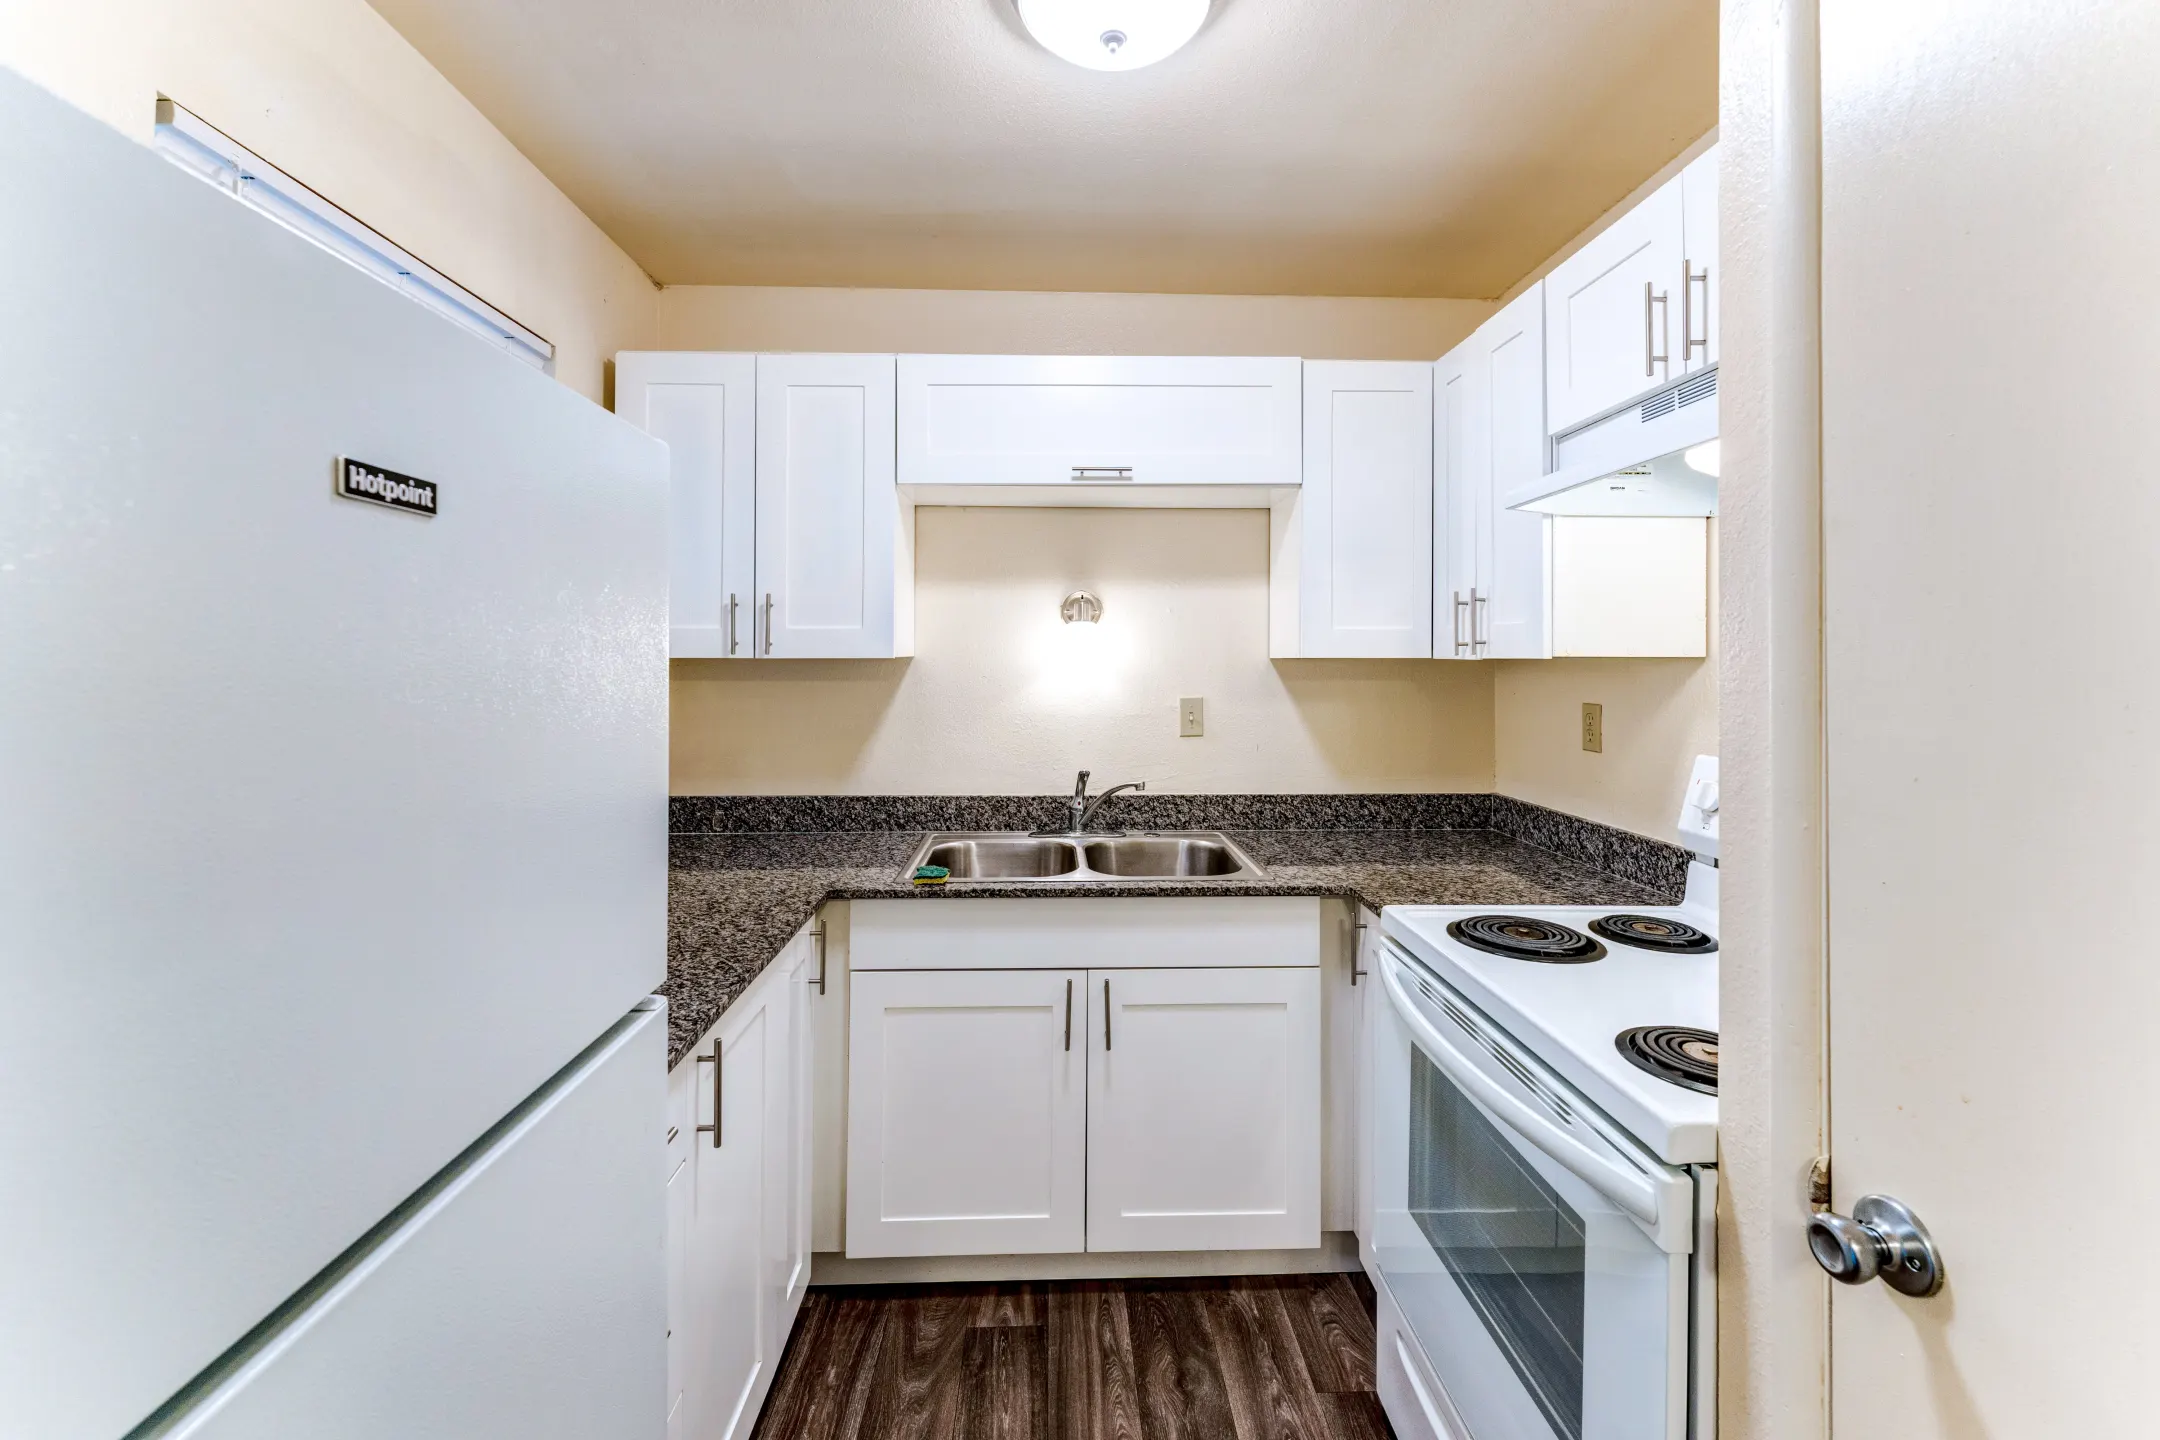 Kitchen - Mirador Apartments - Ogden, UT